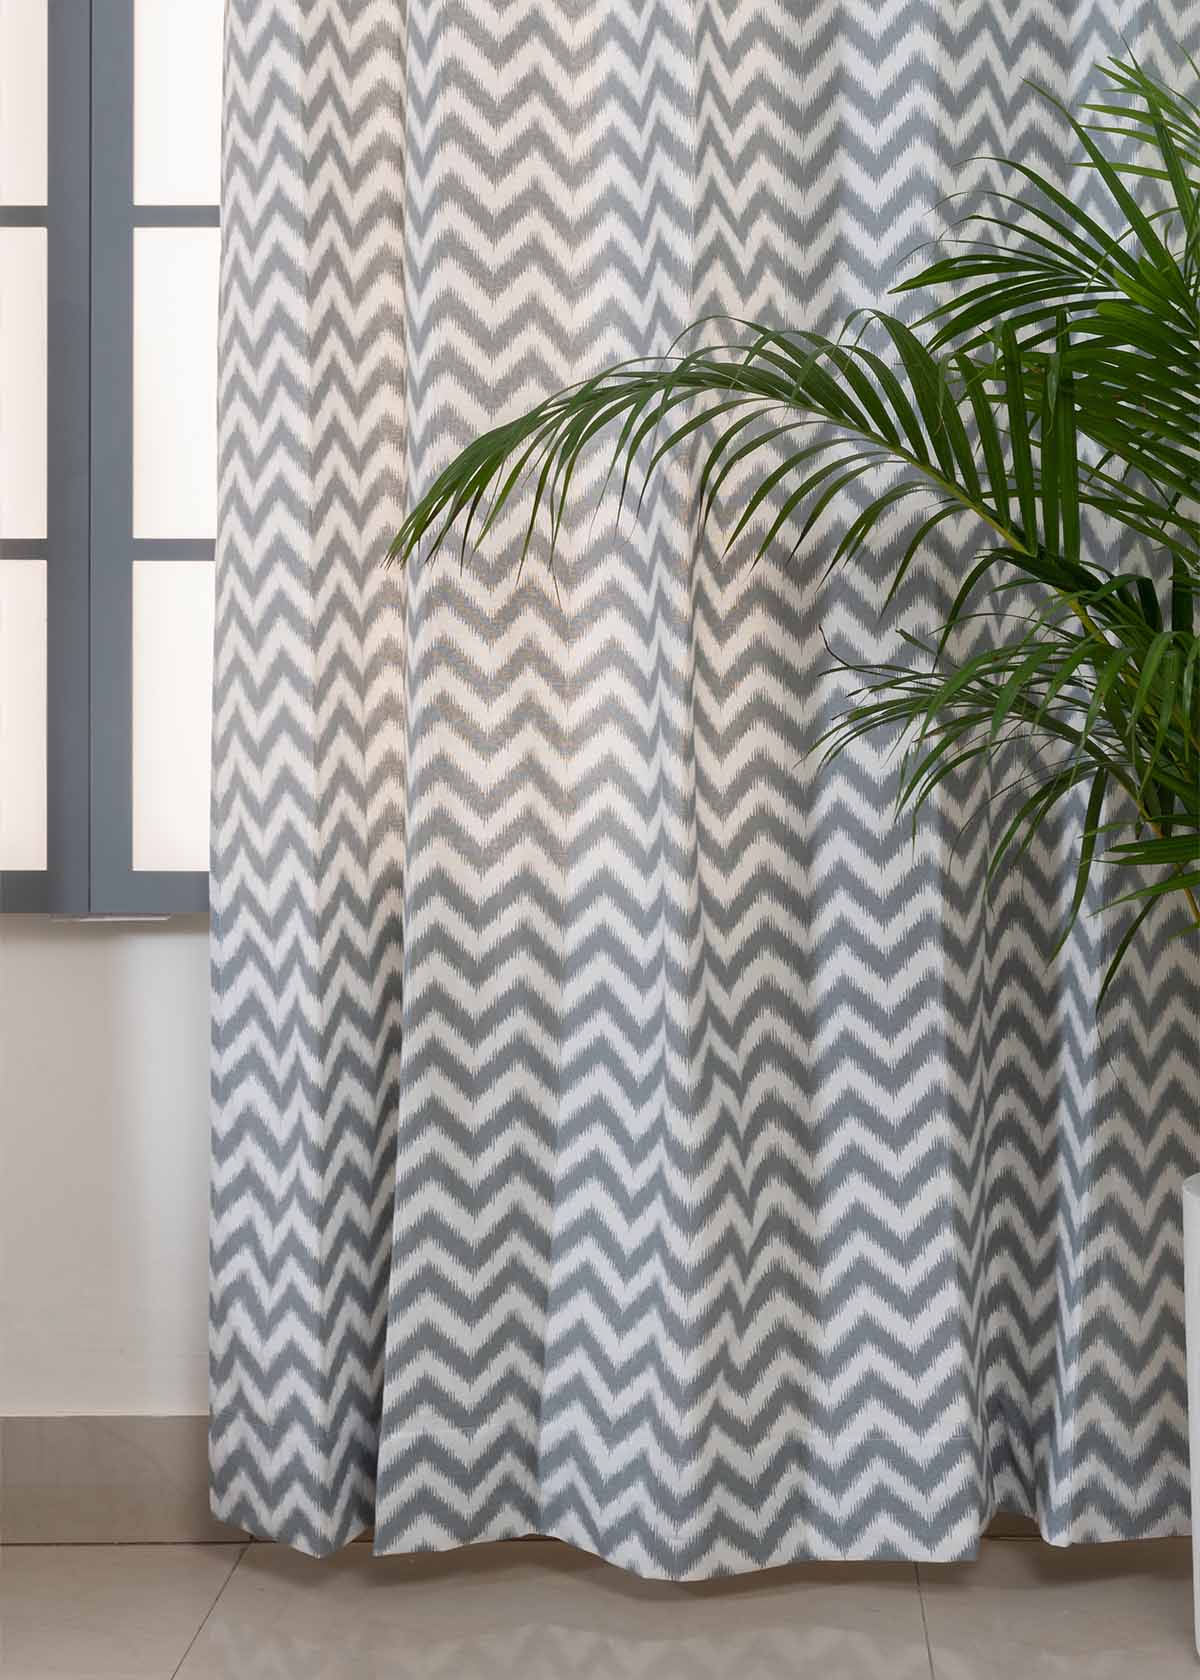 Ikat Chevron 100% cotton geometric curtain for living room - Room darkening -  Grey - Pack of 1